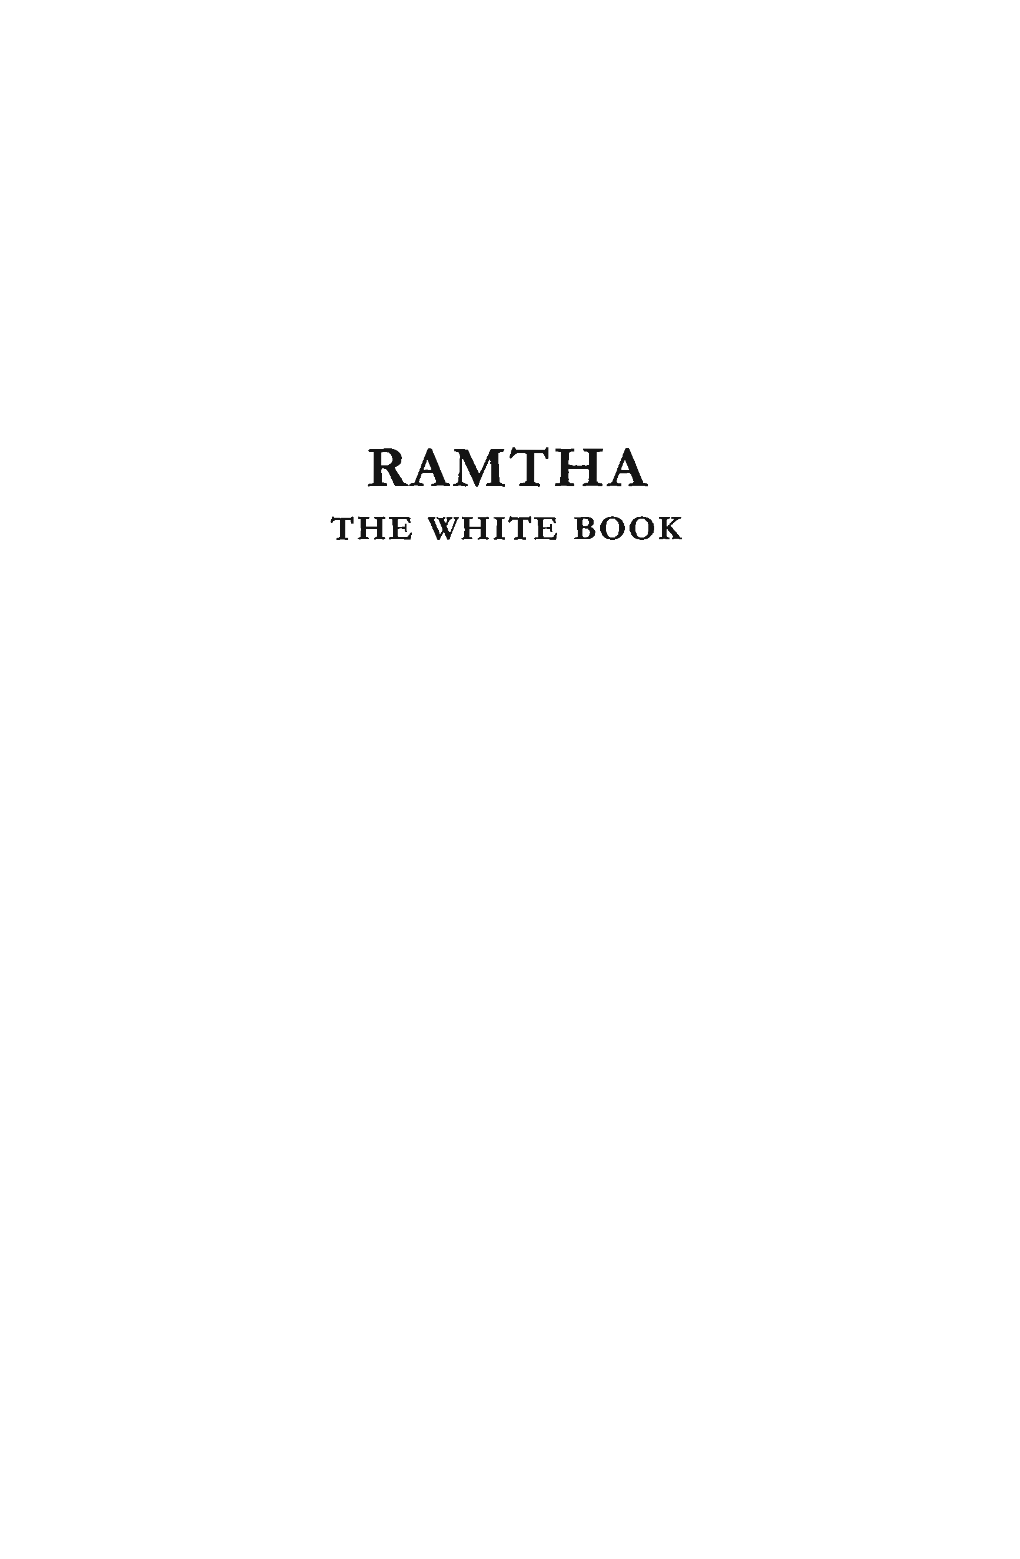 The White Book Ramtha the White Book